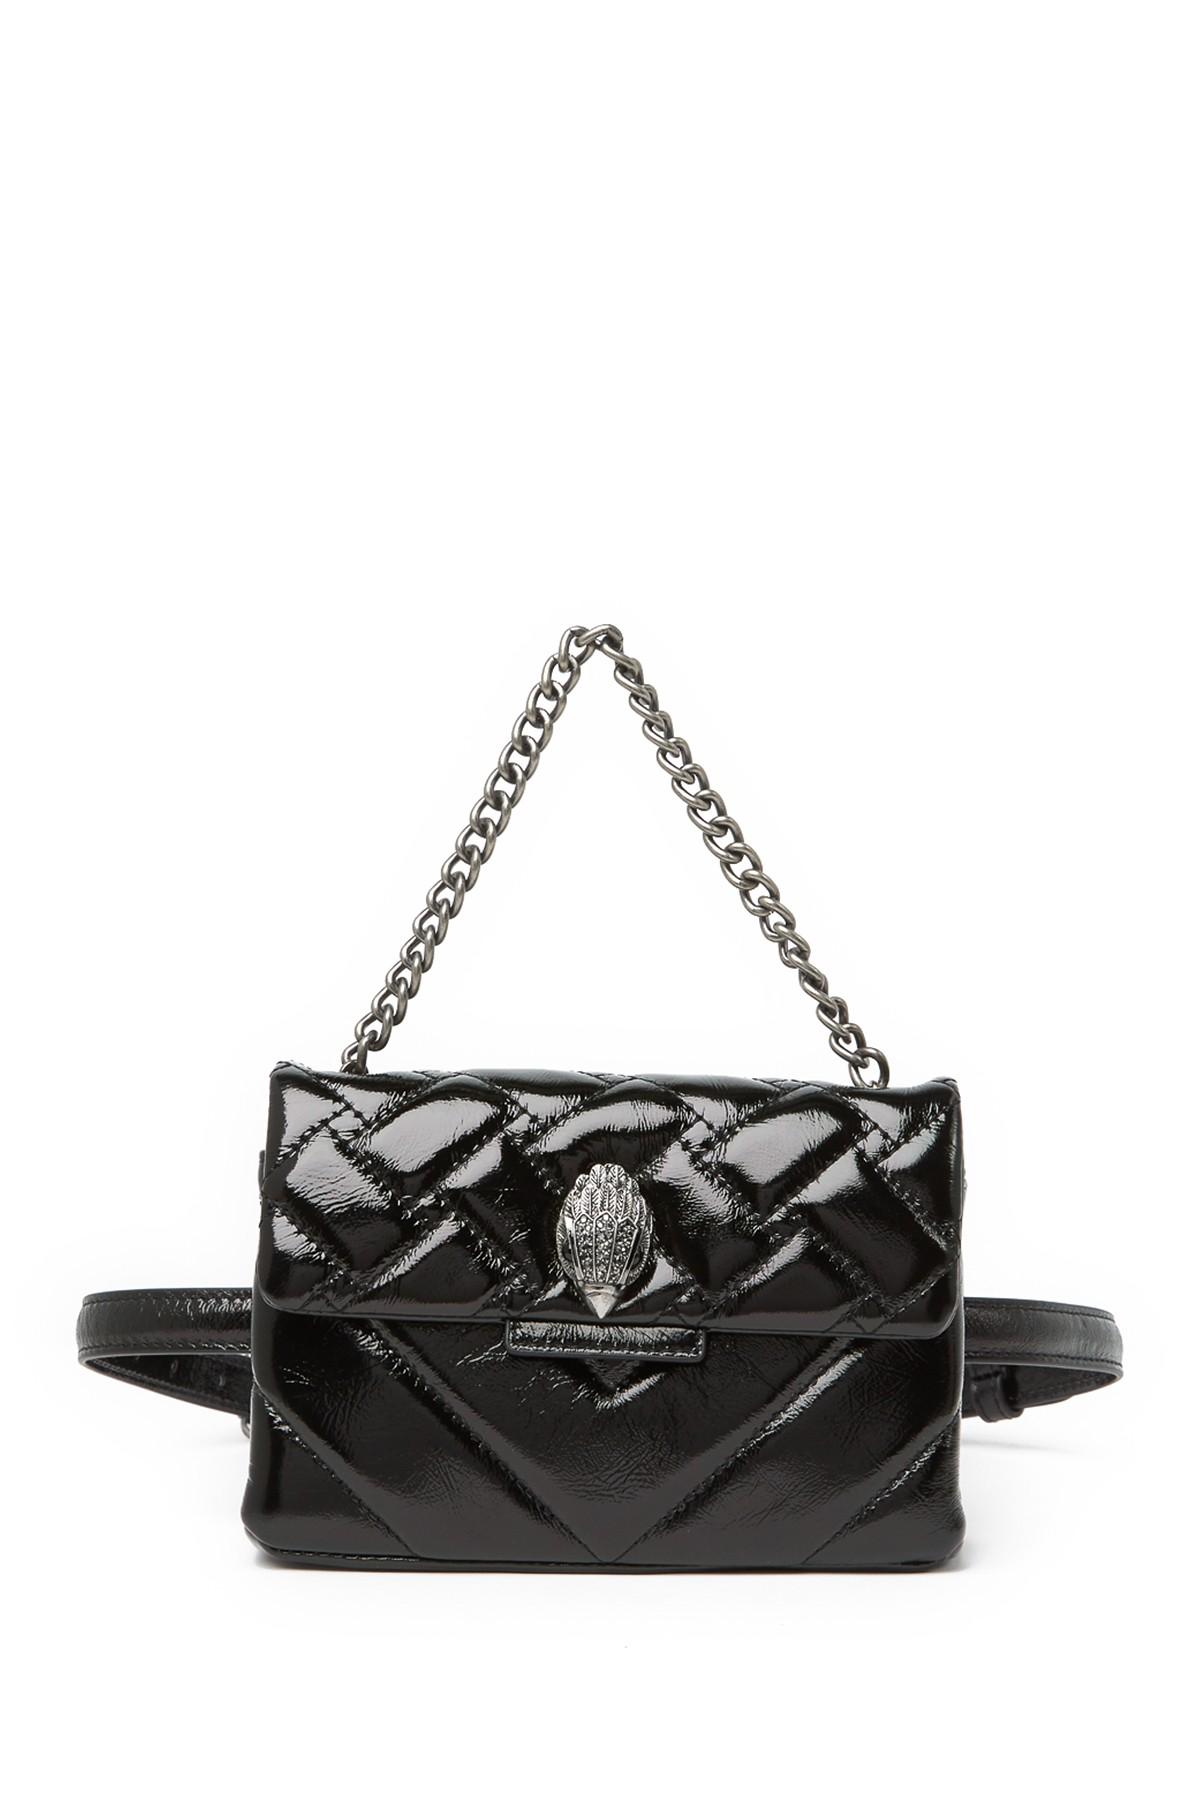 Kurt Geiger Patent Leather Kensington Belt Bag in Black | Lyst